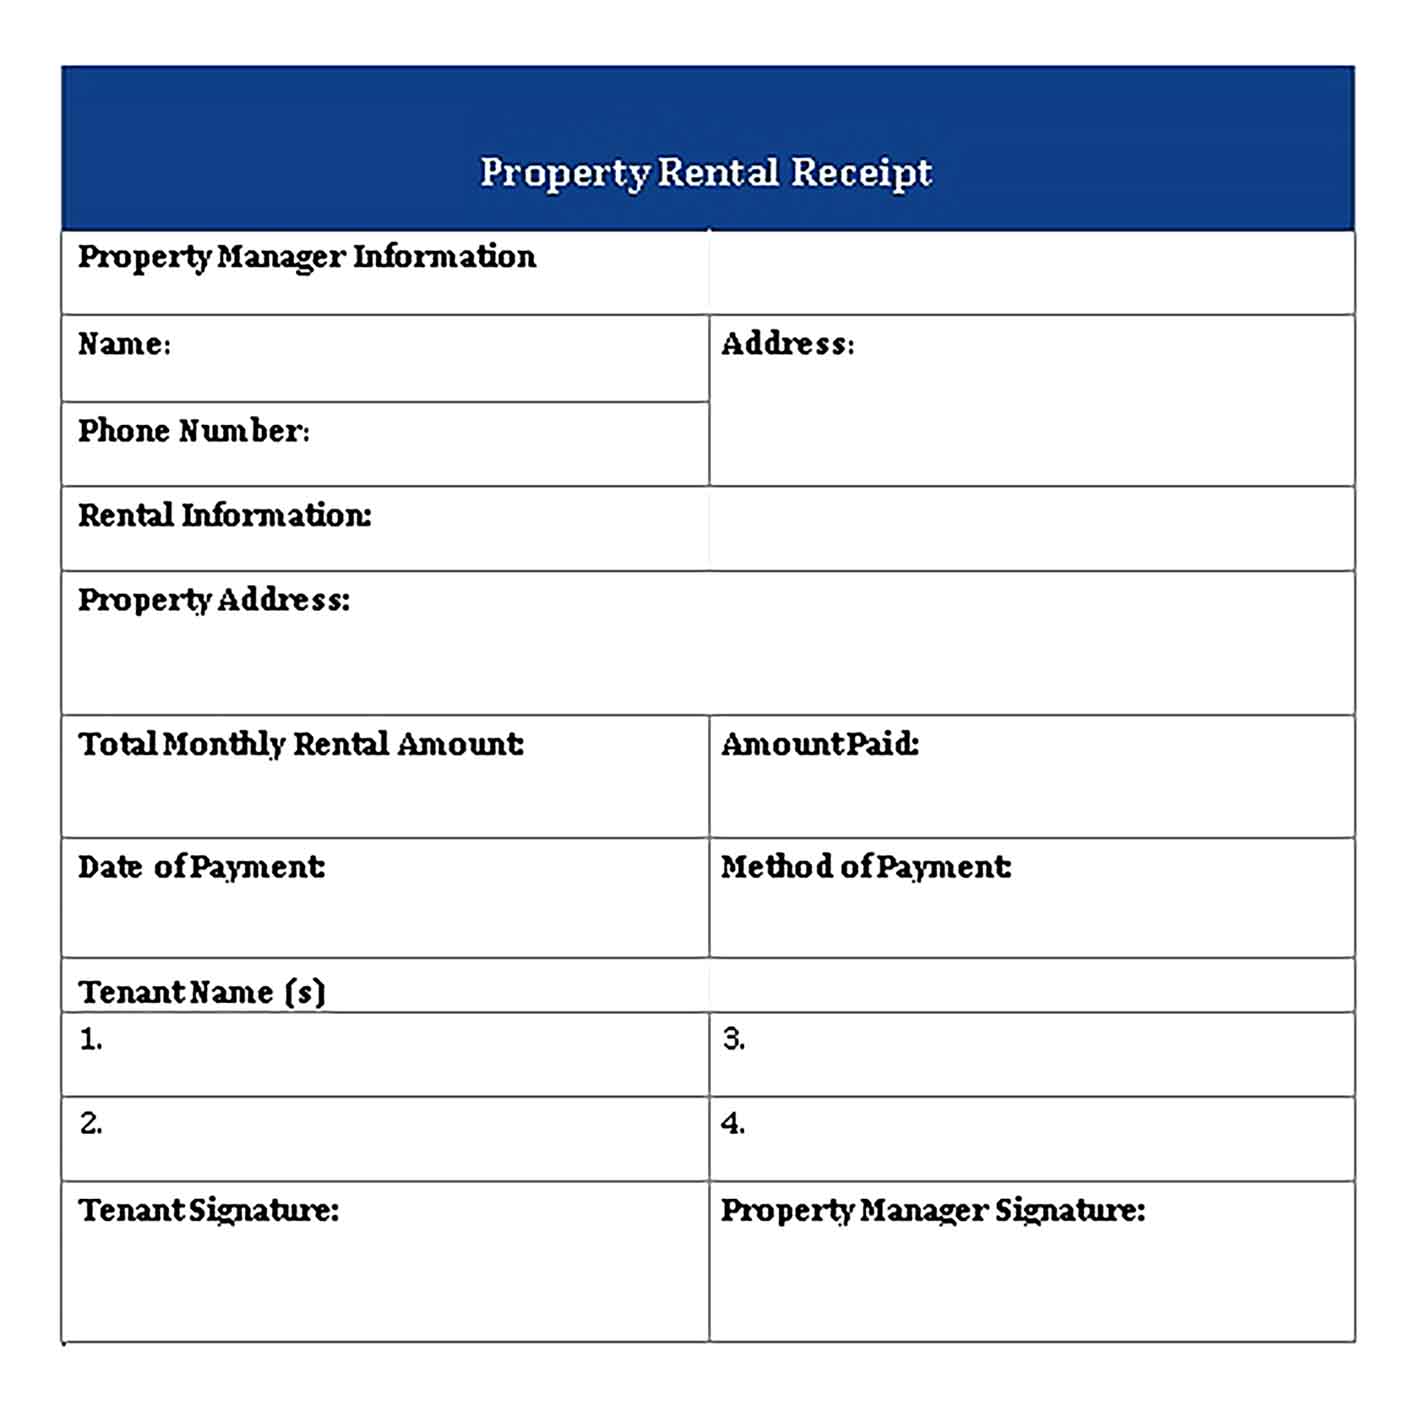 Sample Property Rental Receipt 1 Templates